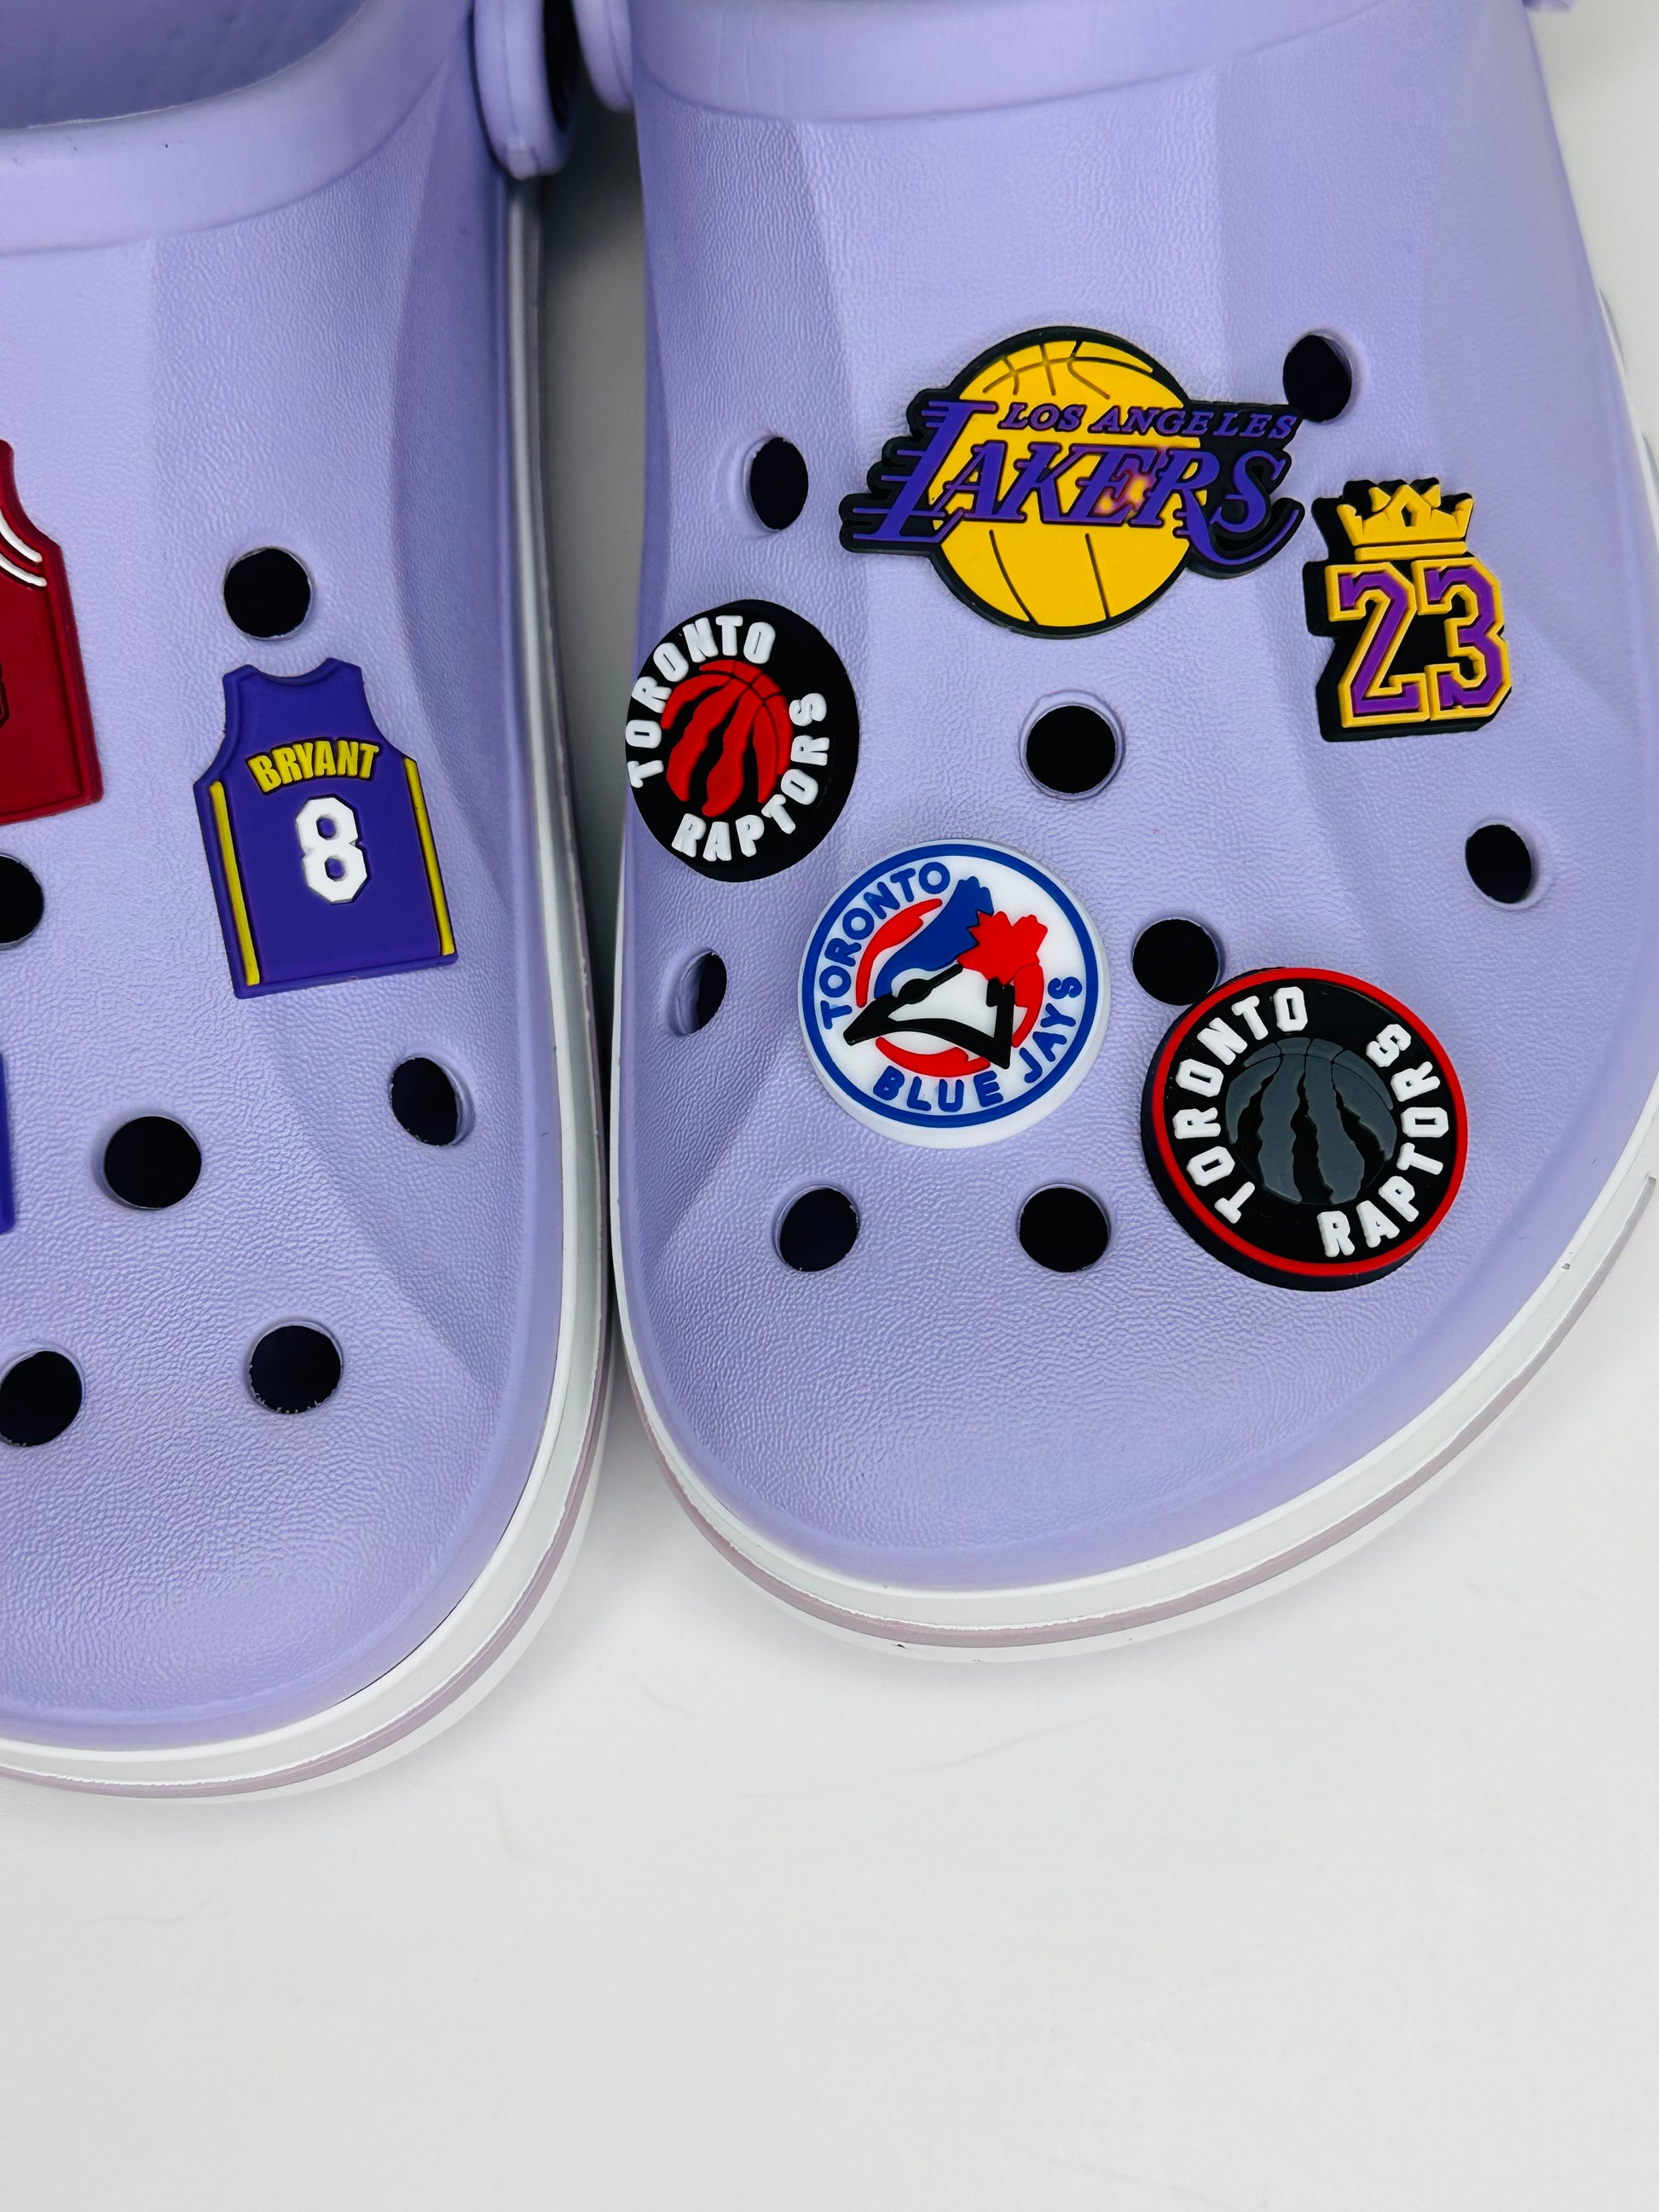 Crocs Unisex-Adult Jibbitz Shoe Charms - NBA Basketball Team Shoe Charm Singles, Sports Charms for Boys and Girls